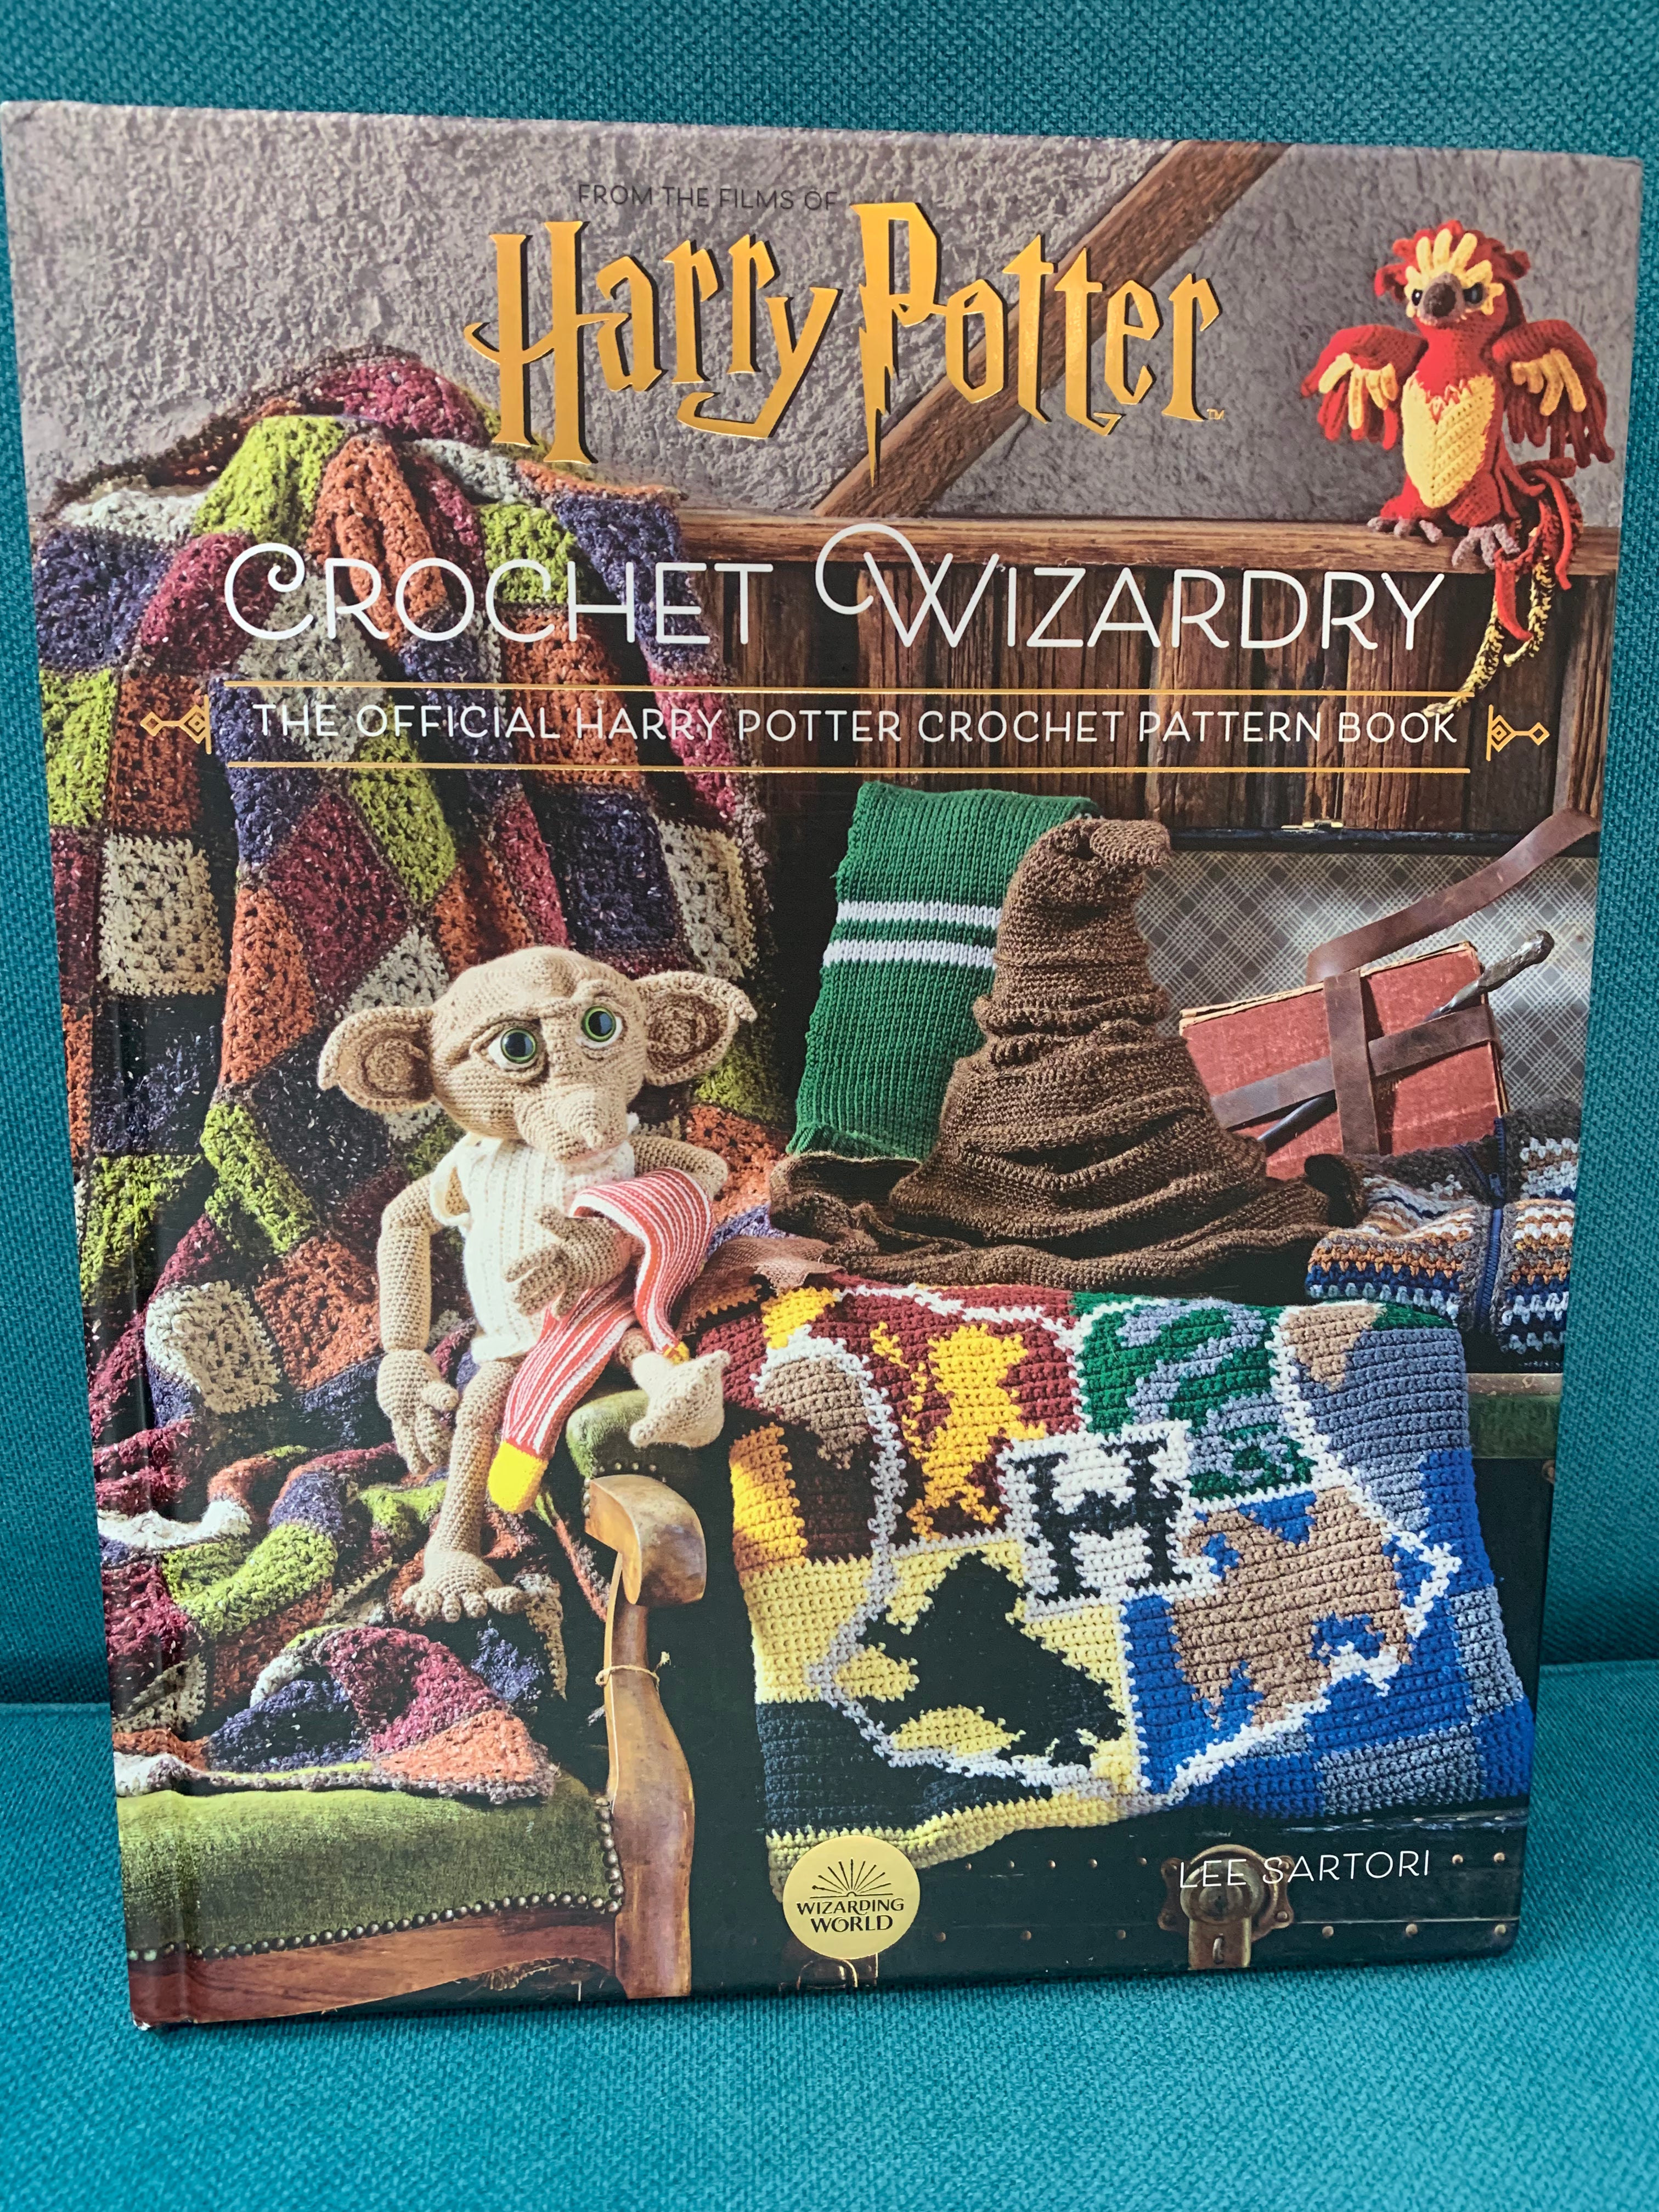 Harry Potter Crochet Wizardry - Purls of Wisdom